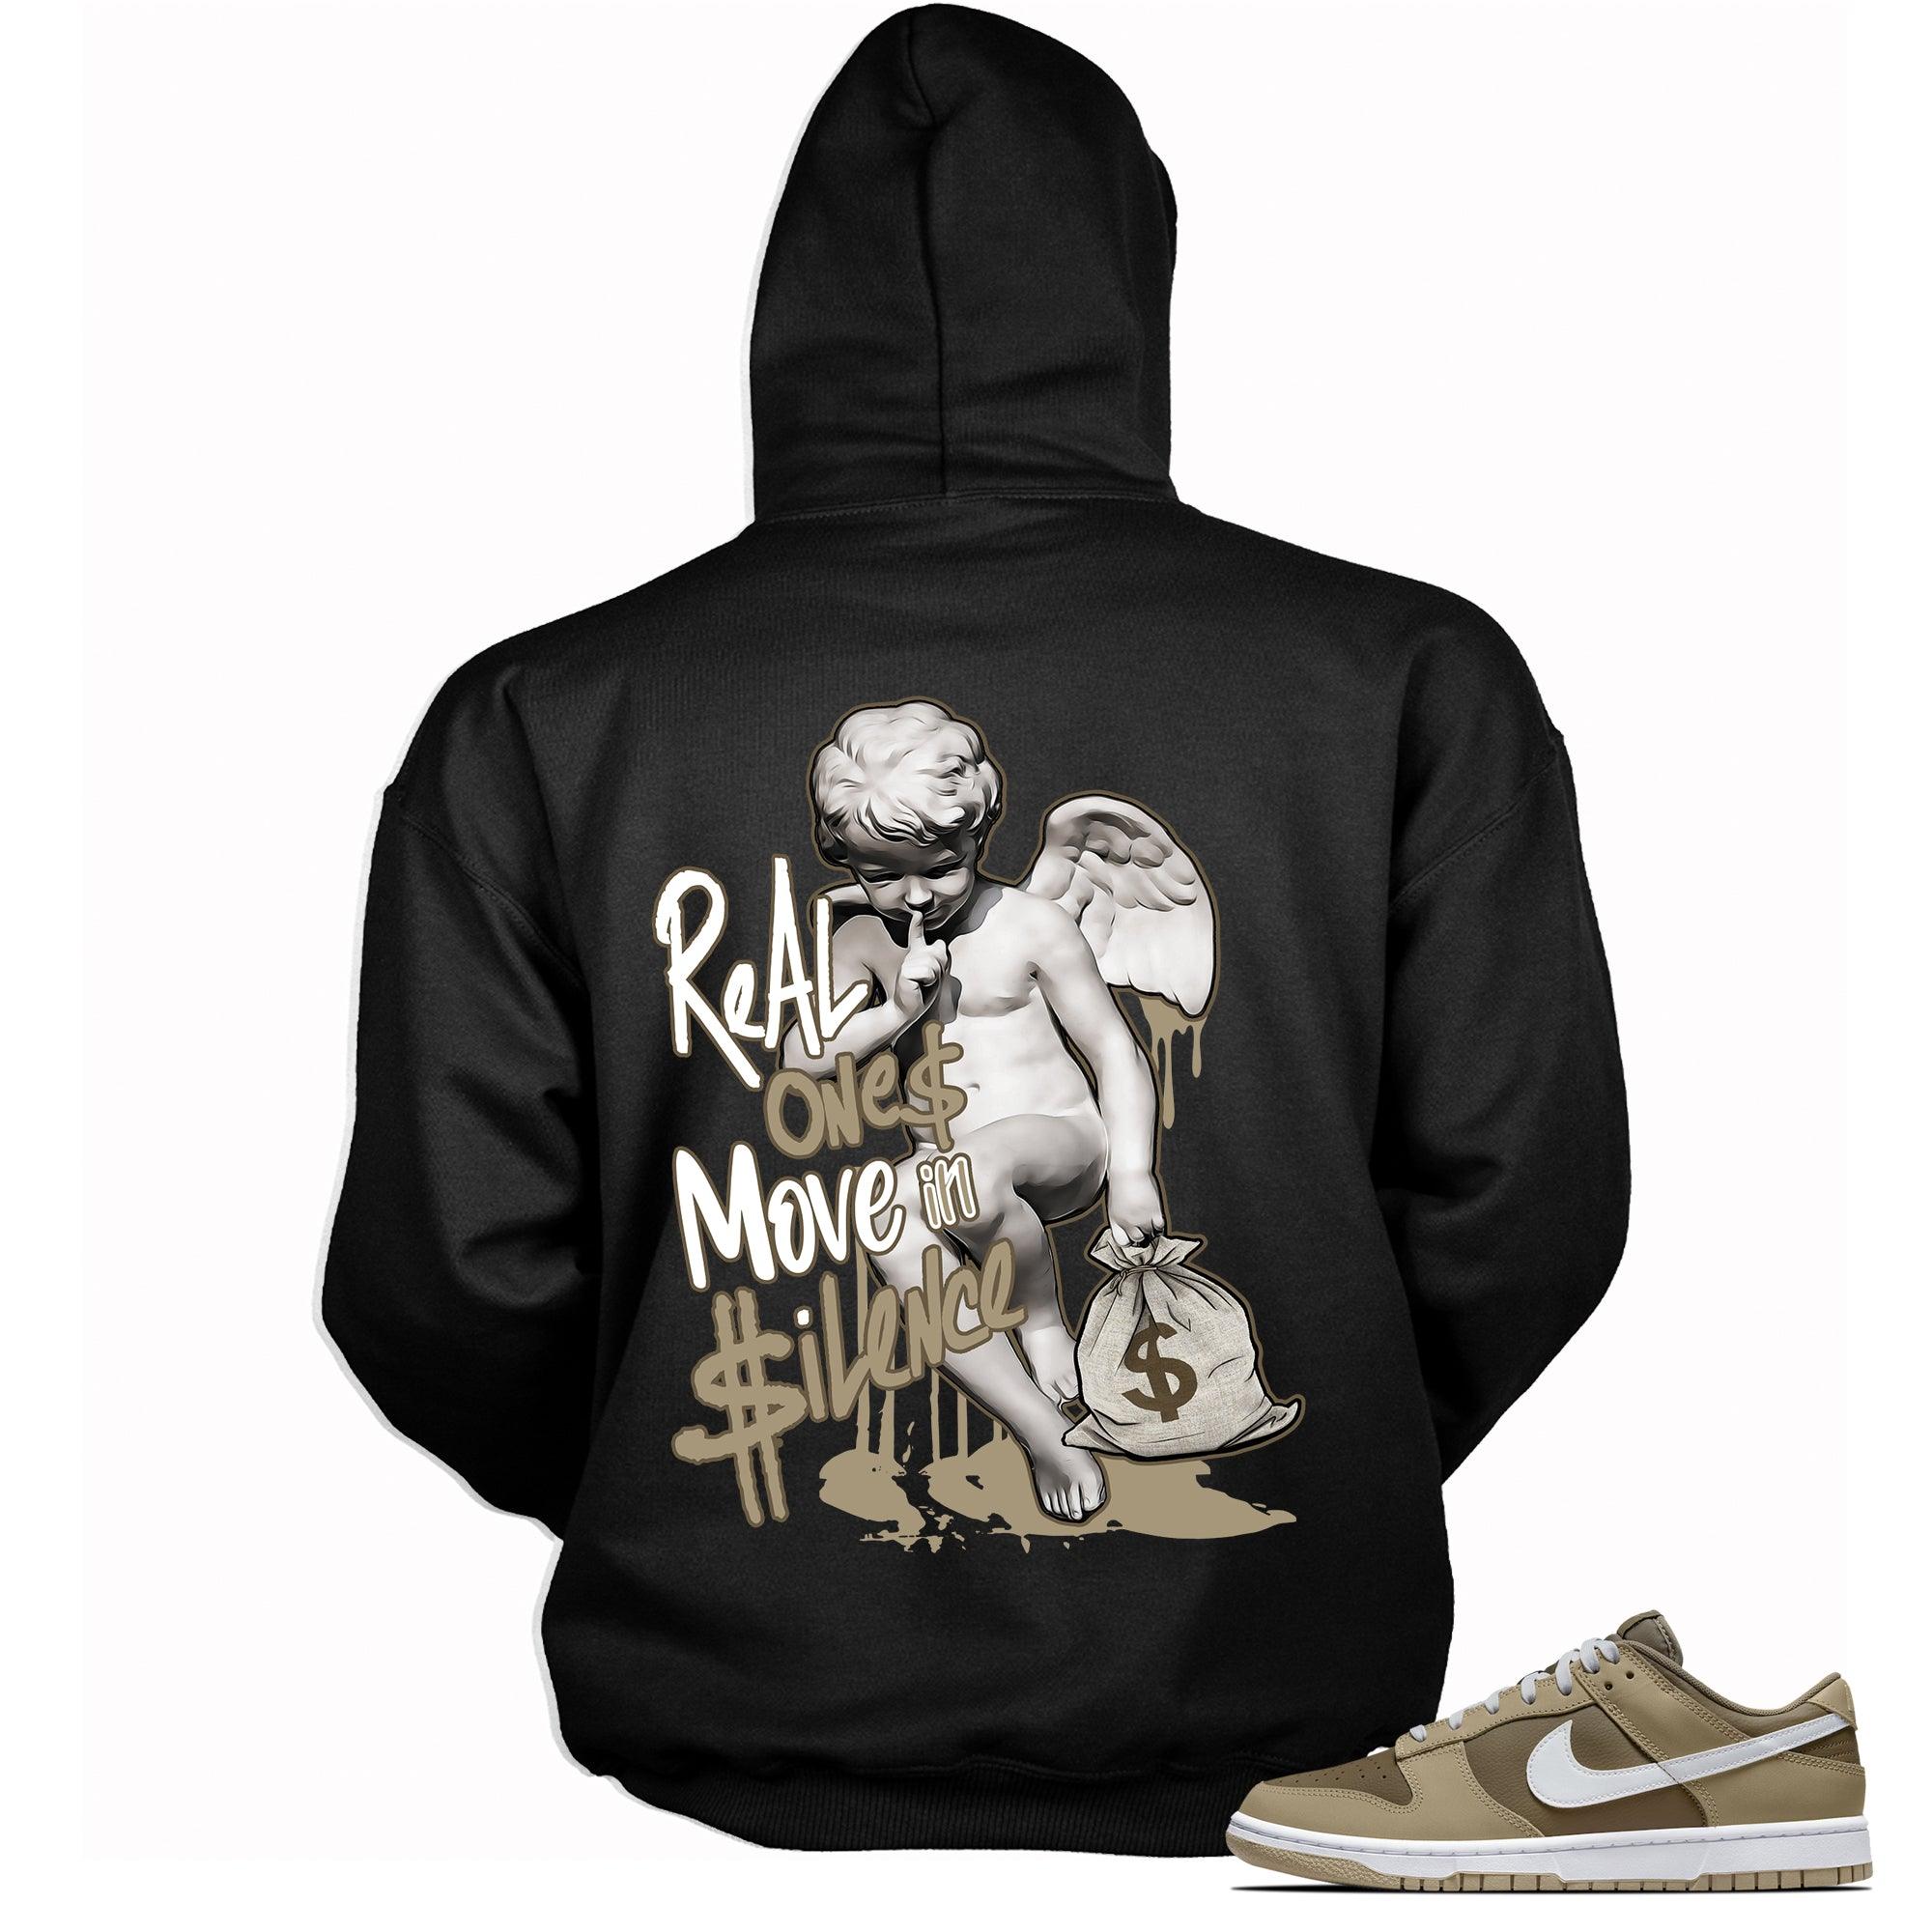 Real Ones Move In Silence Sneaker Sweatshirt Nike Dunk Low Judge Grey photo